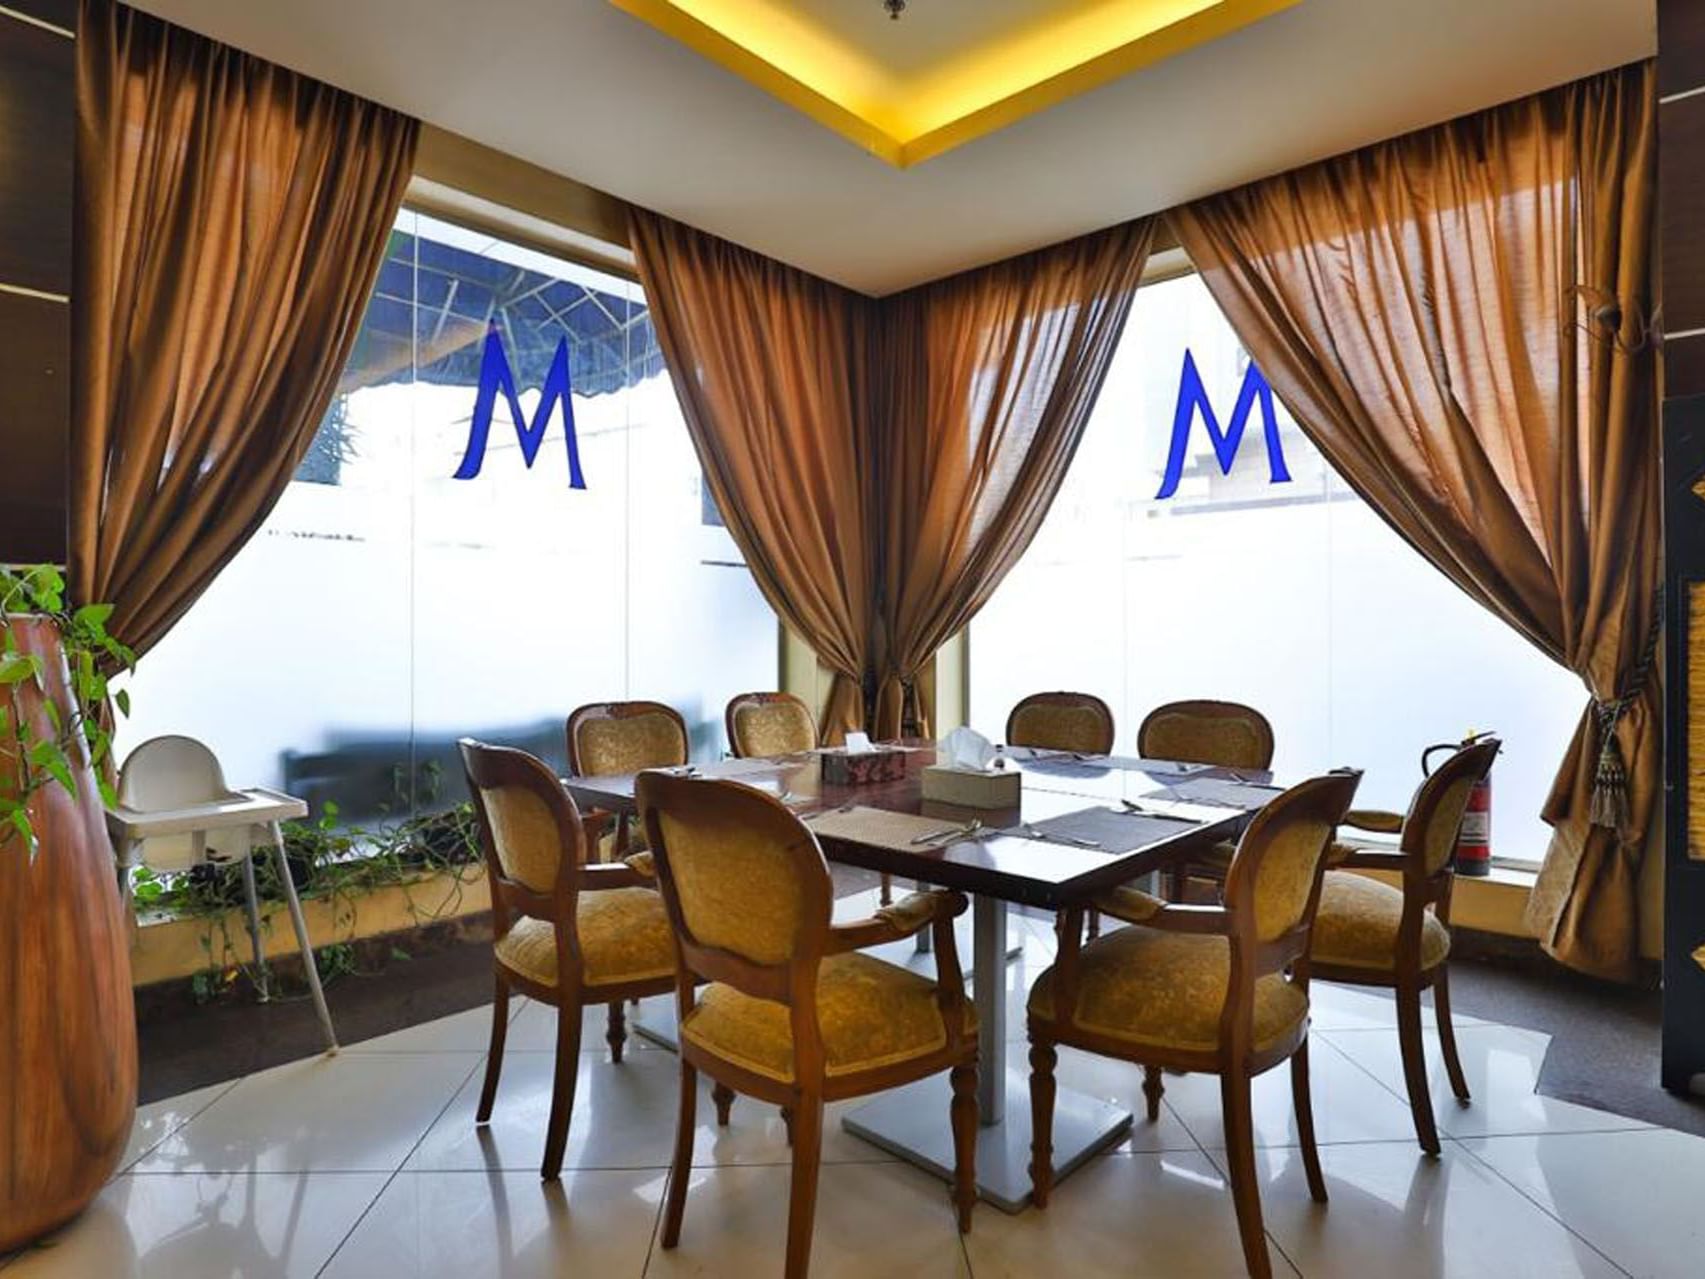 Arranged dining table in Al Dana Restaurant at Mena Hotel Taif